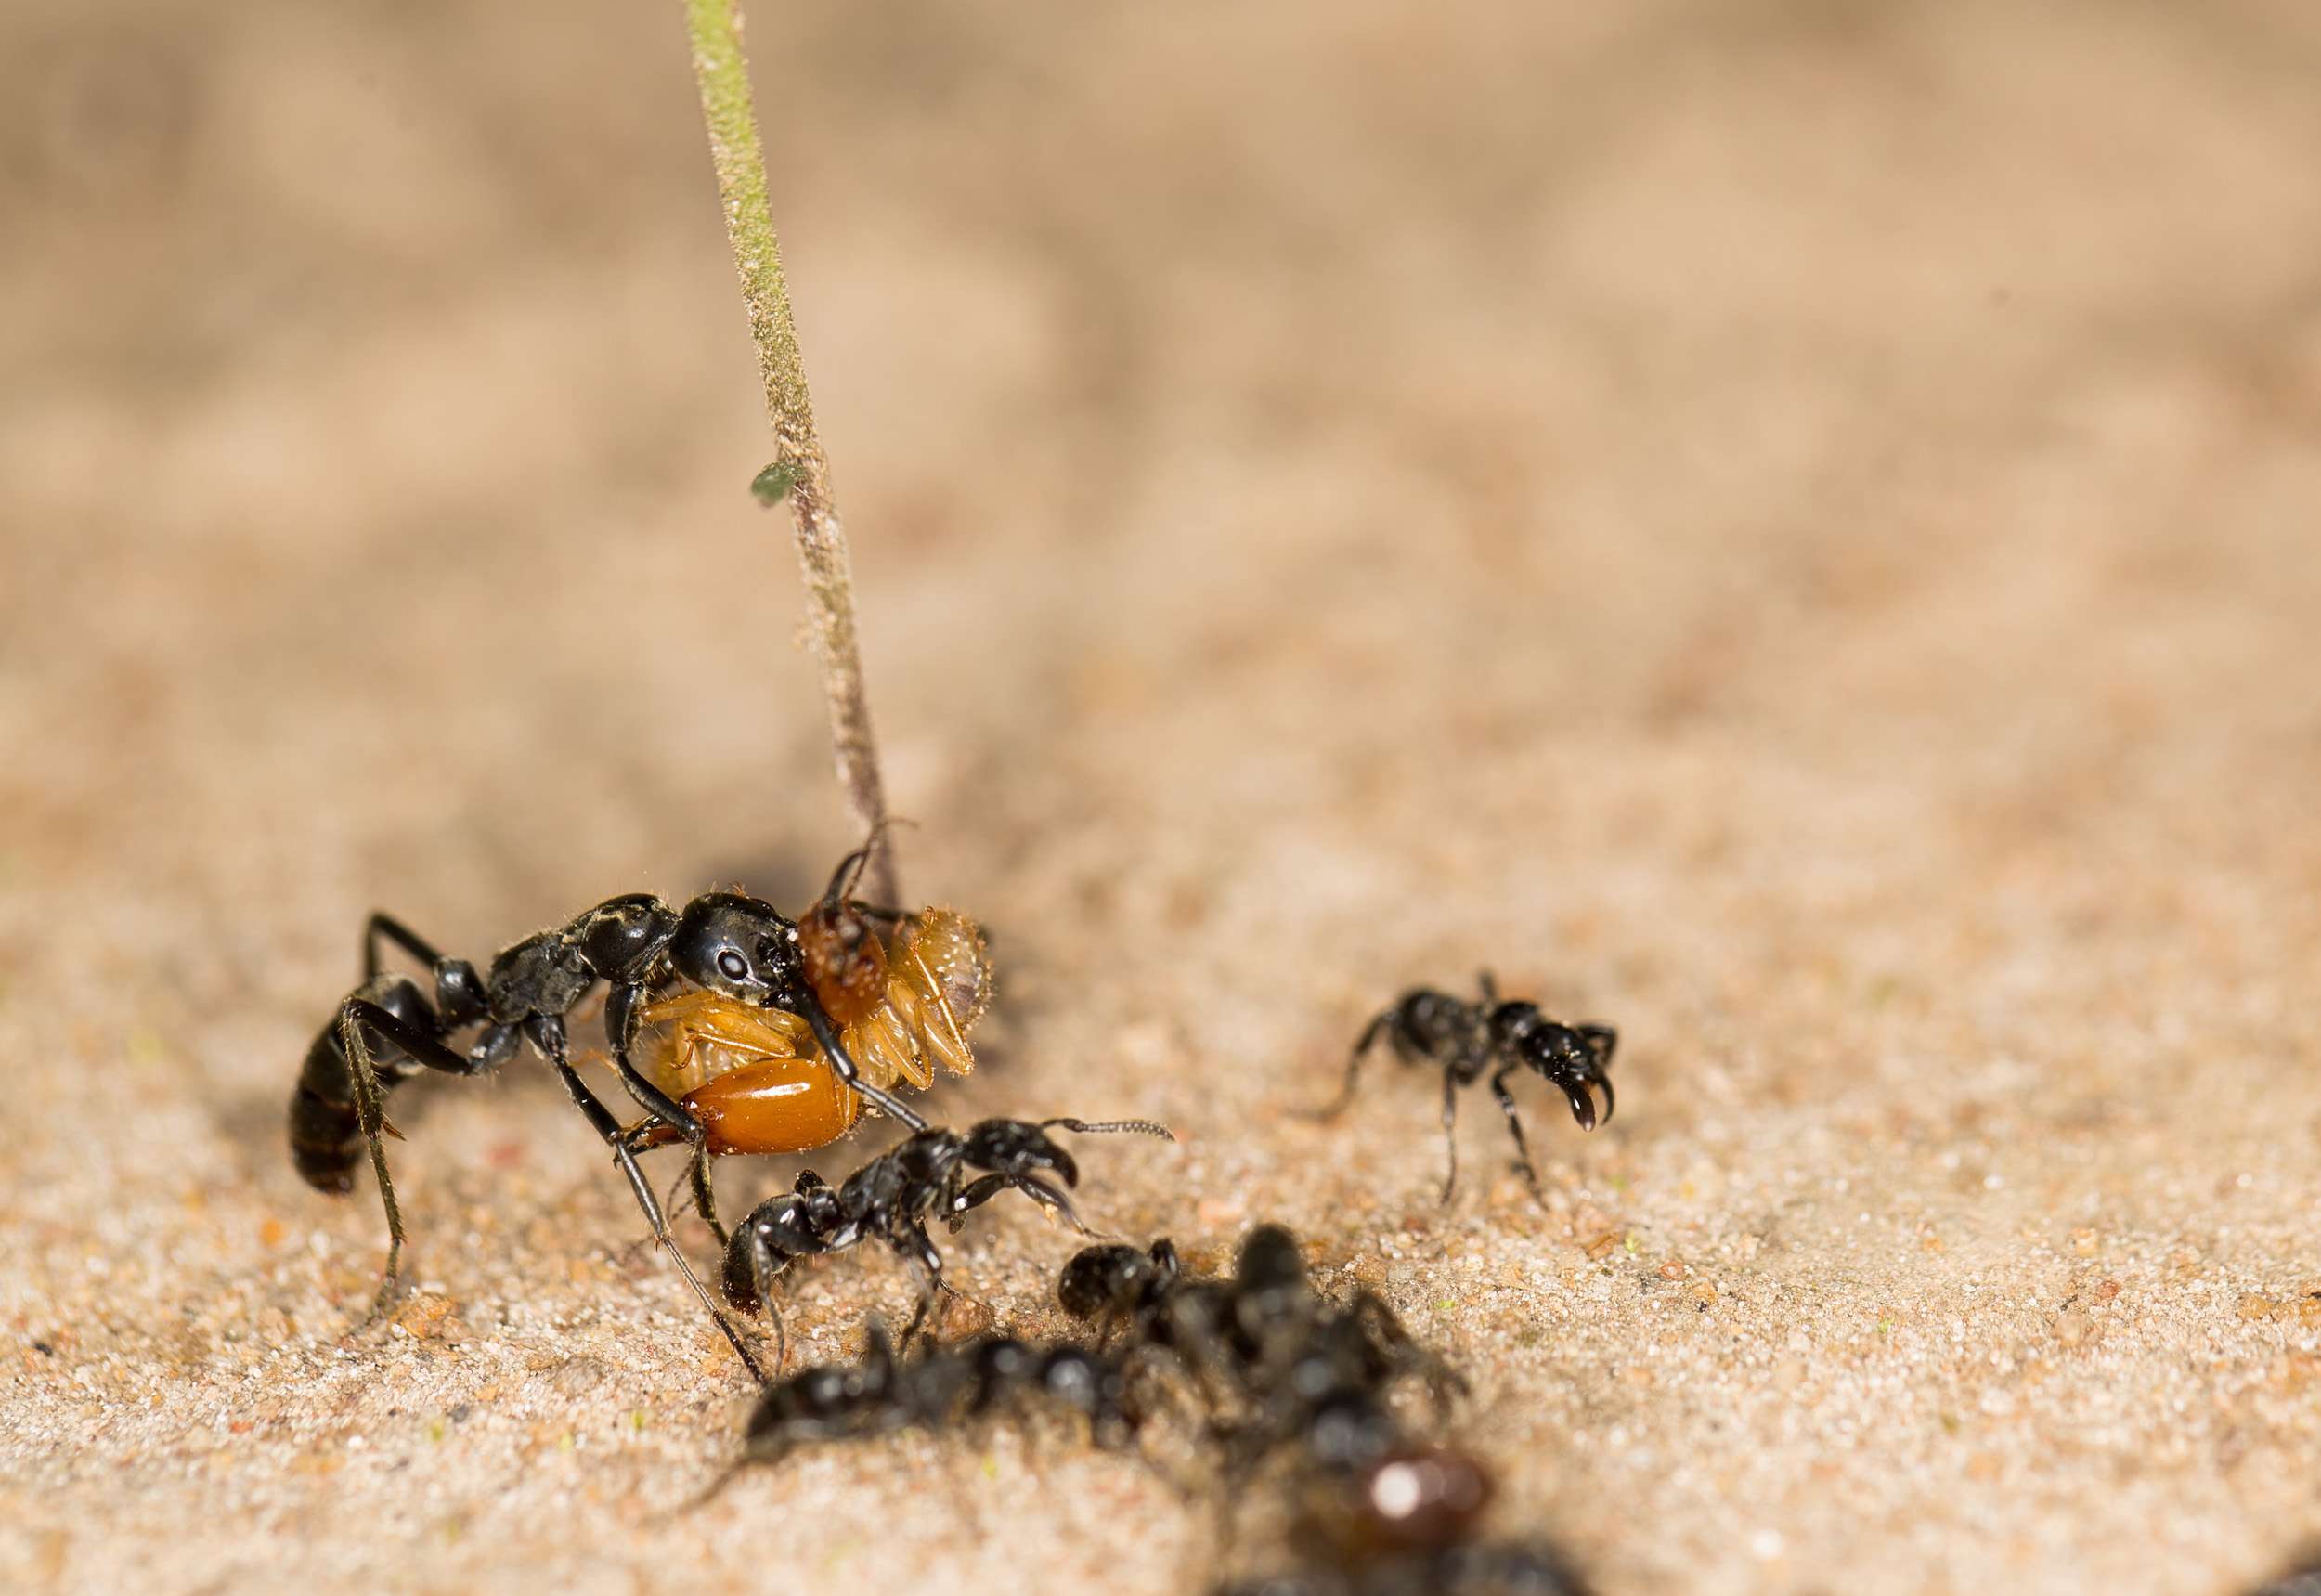 Megaponera ants carrying termites